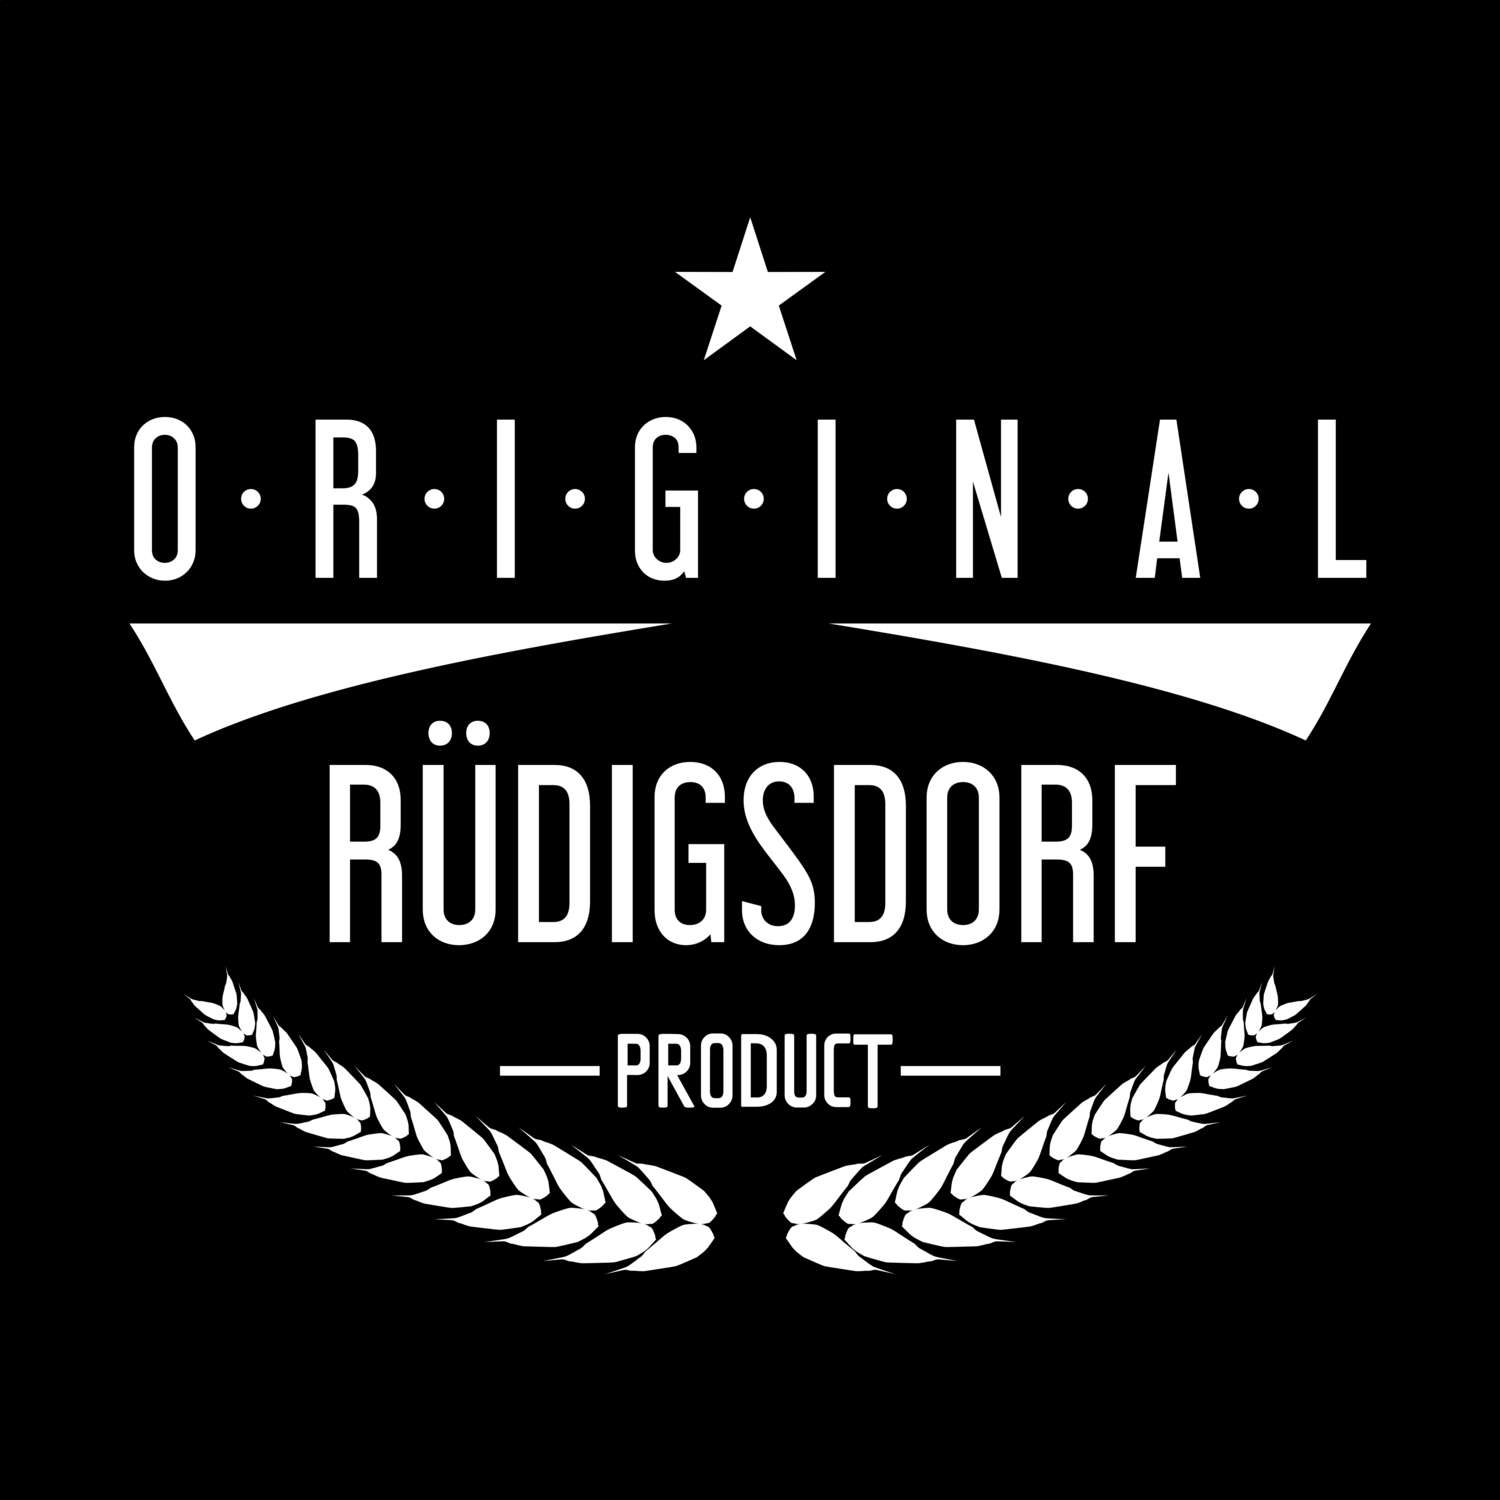 Rüdigsdorf T-Shirt »Original Product«